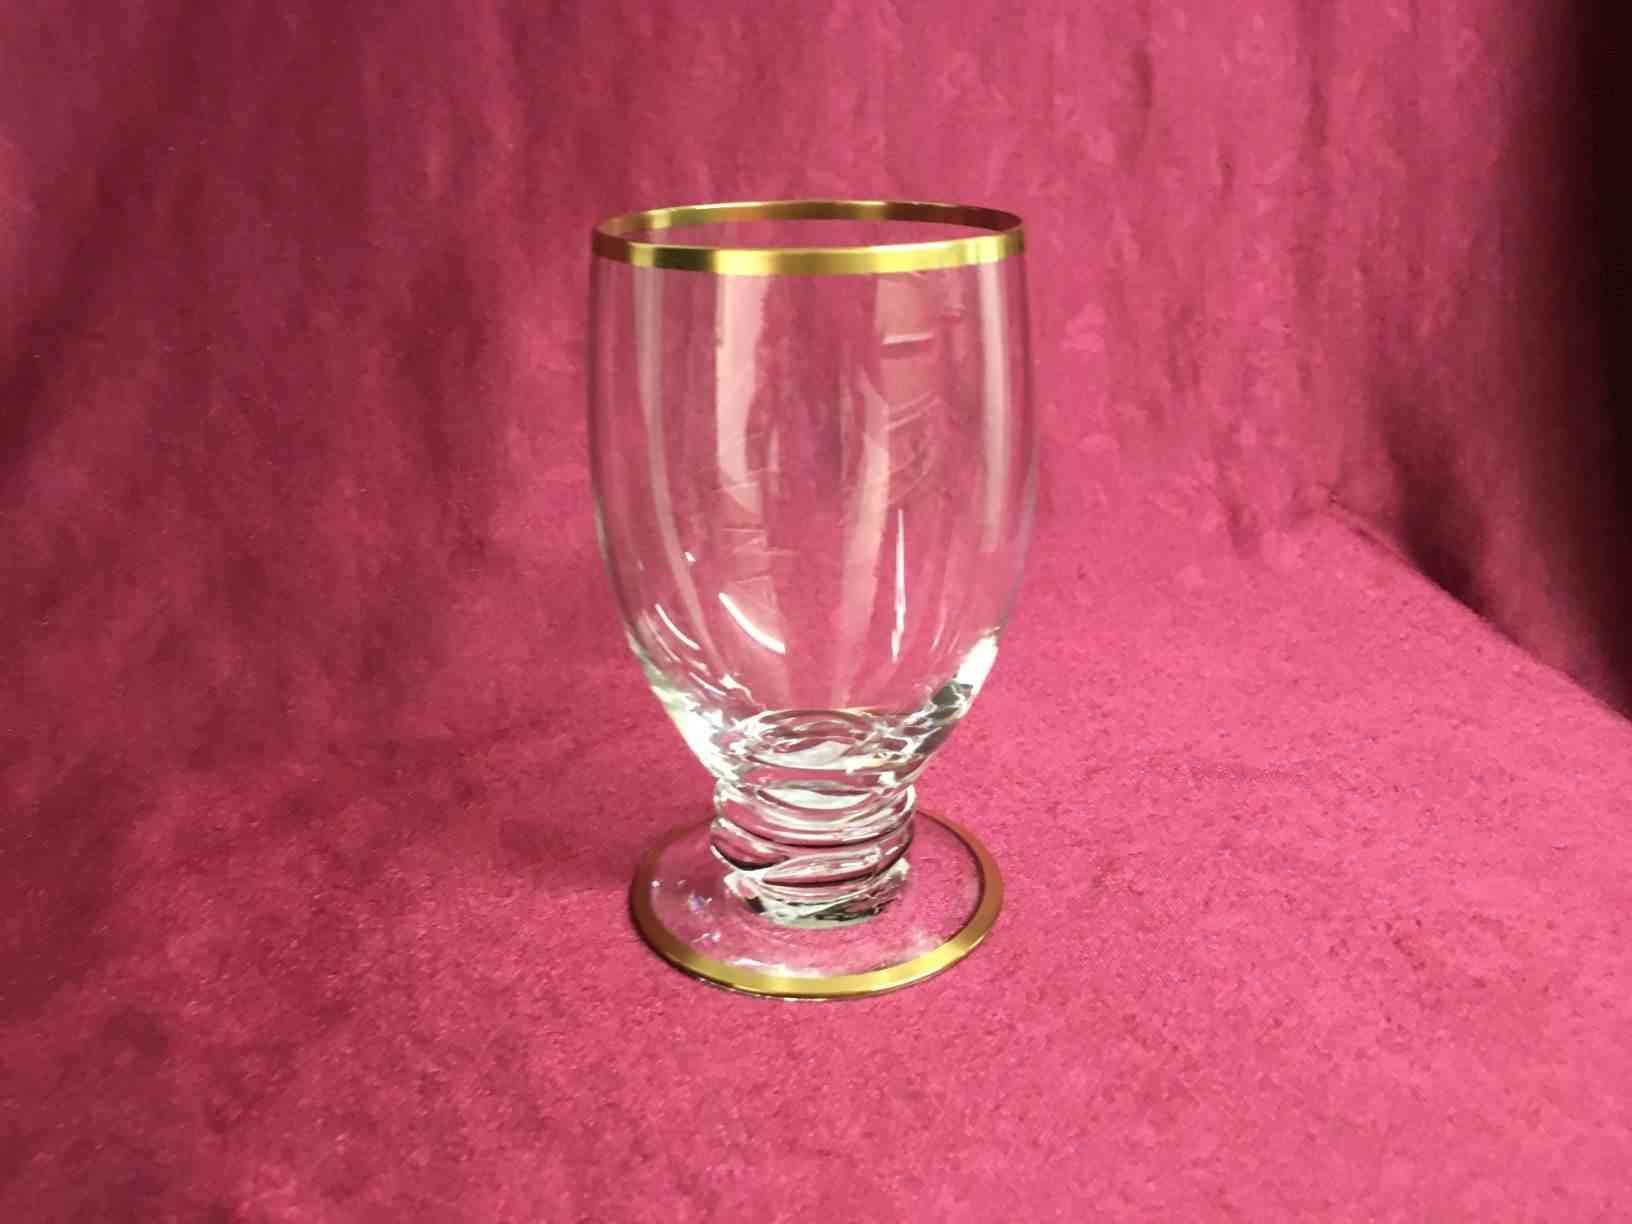 Holmegaard  Gisselfeld glas - Ølglas. Pris: 125,- Kr. pr. stk.